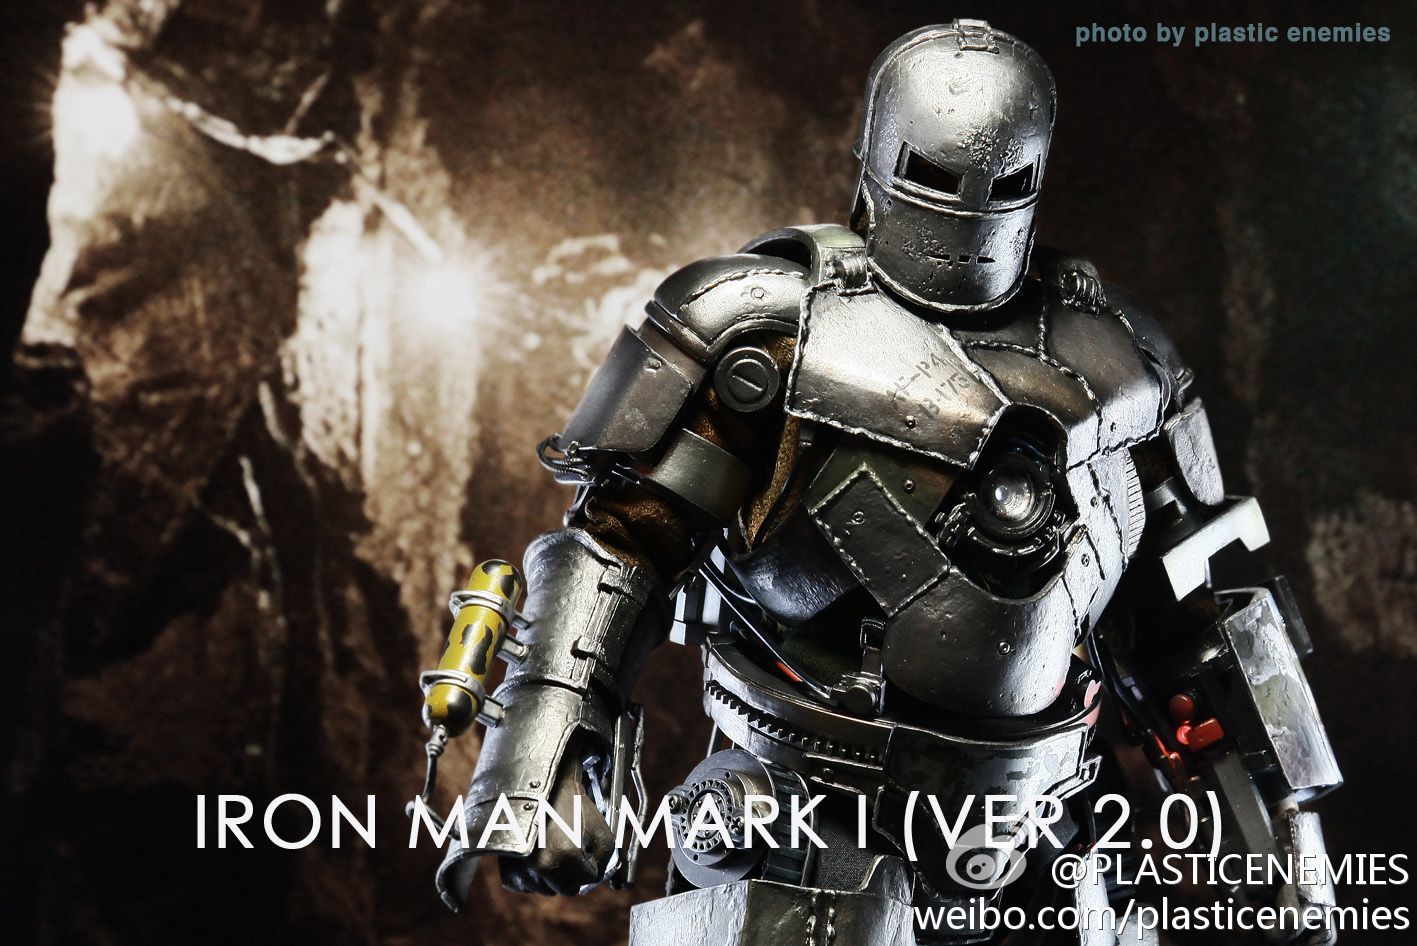 [Hot Toys] Iron Man - Mark I - 2.0 Limited Edition Collectible Figurine - Página 10 6a853733jw1dw4jc840zhj